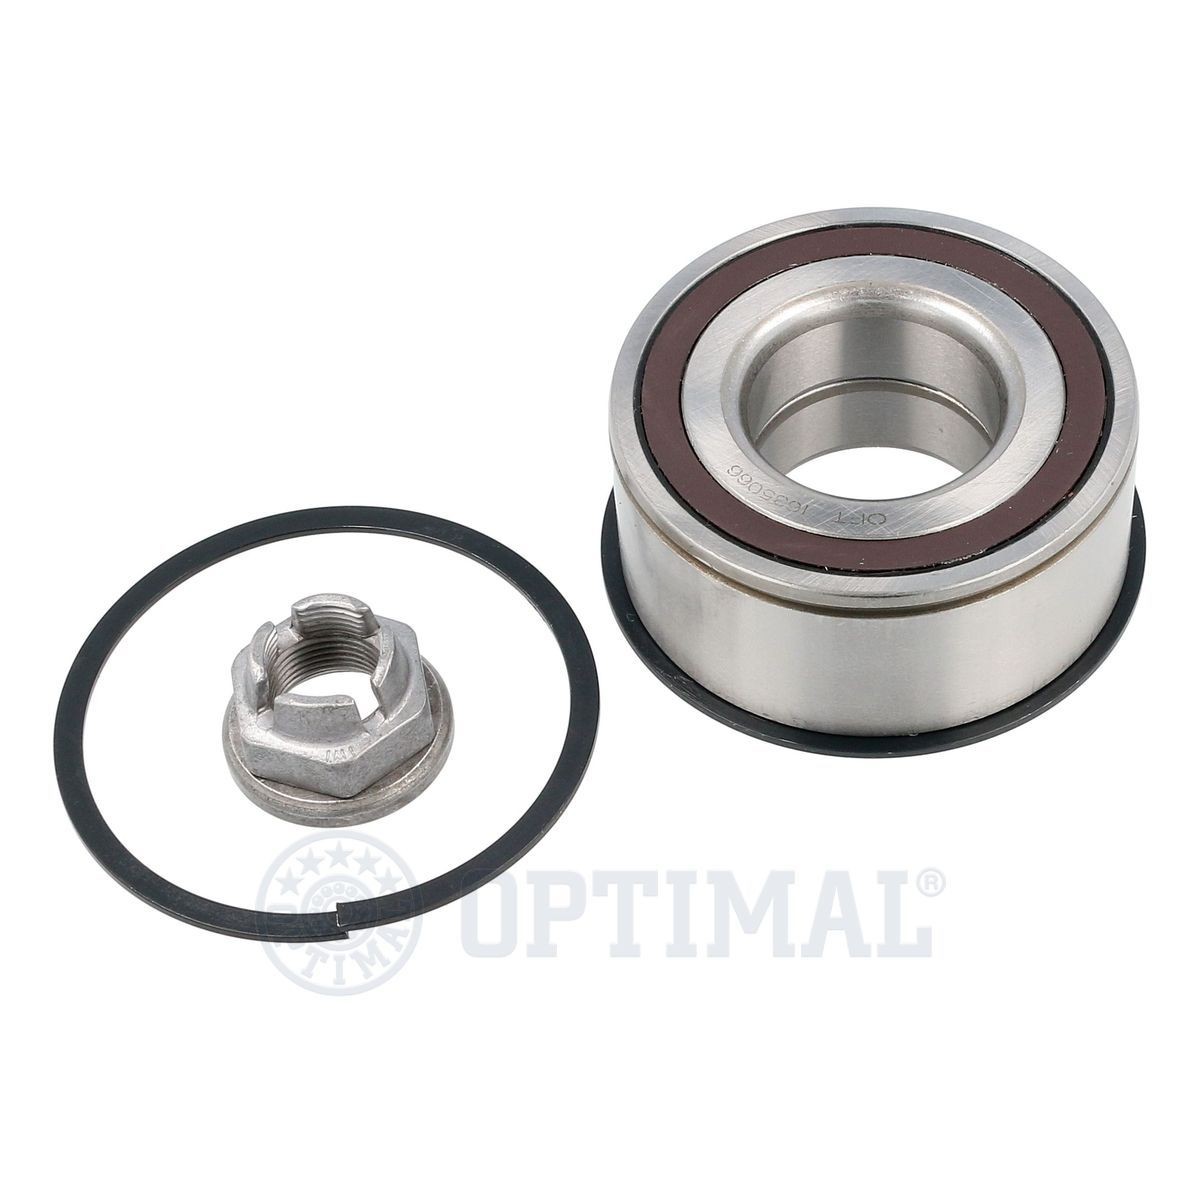 OPTIMAL 701914 Wheel bearing kit with integrated magnetic sensor ring, 84,1 mm